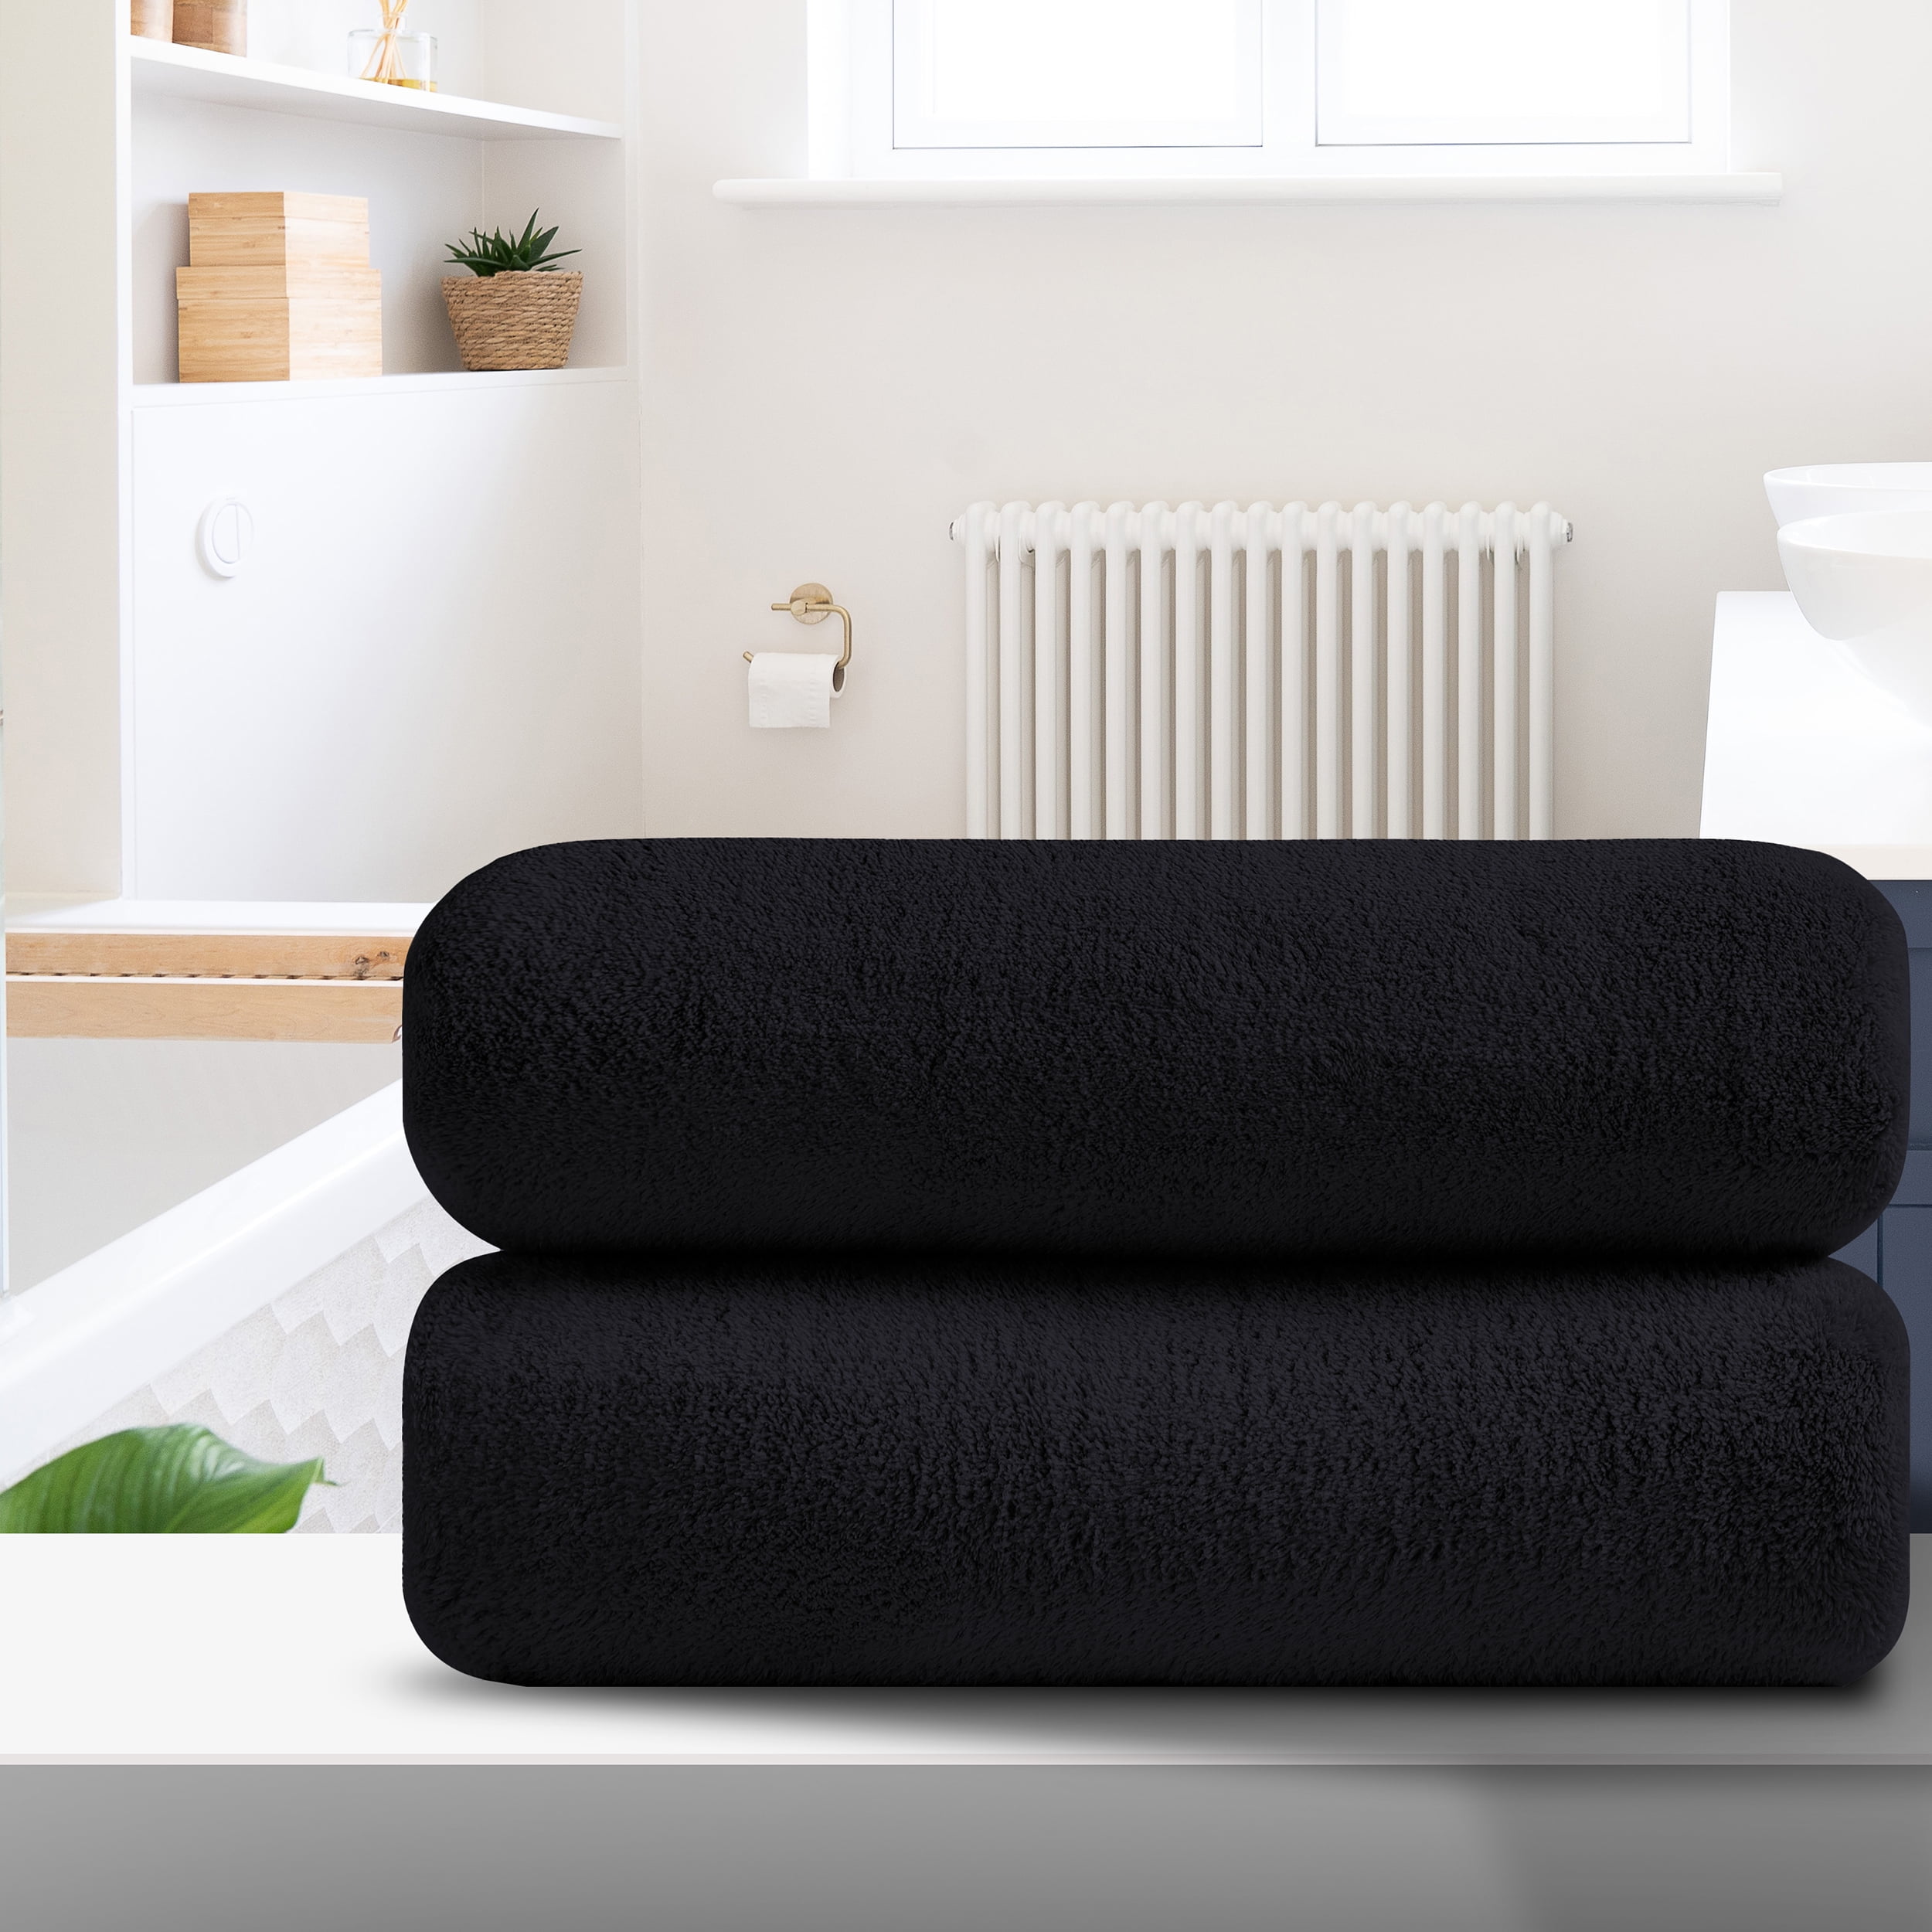 MAGGEA 4 Piece Bath Towel Set White Plush Bath Sheet 700 GSM Oversized Thick Bath Shower Towels 35x70-Extra Soft Cozy-Absorbent-Quick